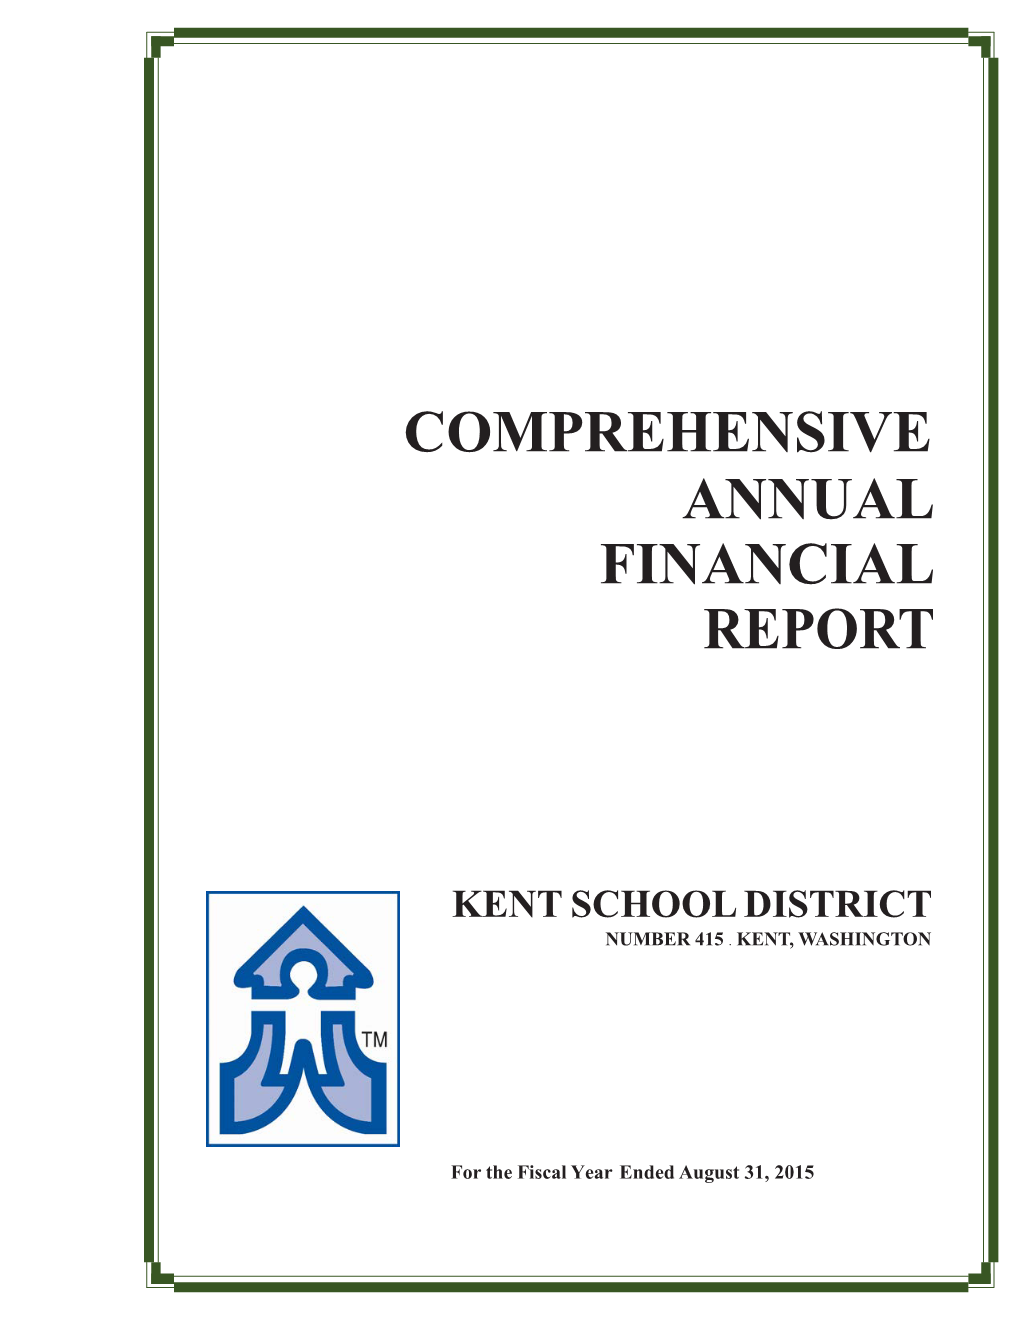 2014-2015 Comprehensive Annual Financial Report